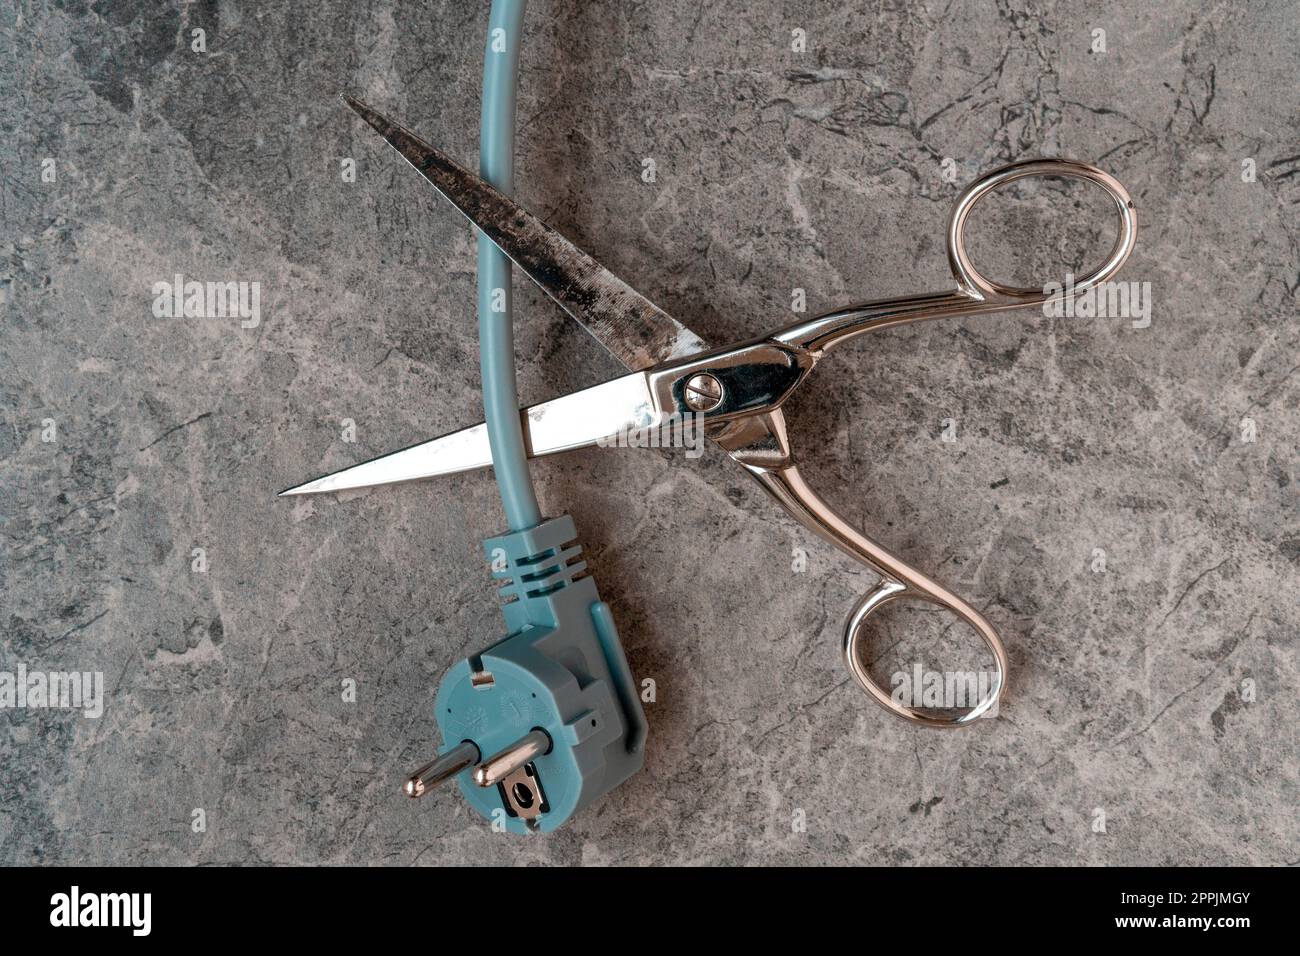 Scissors cutting electric wire Stock Photo